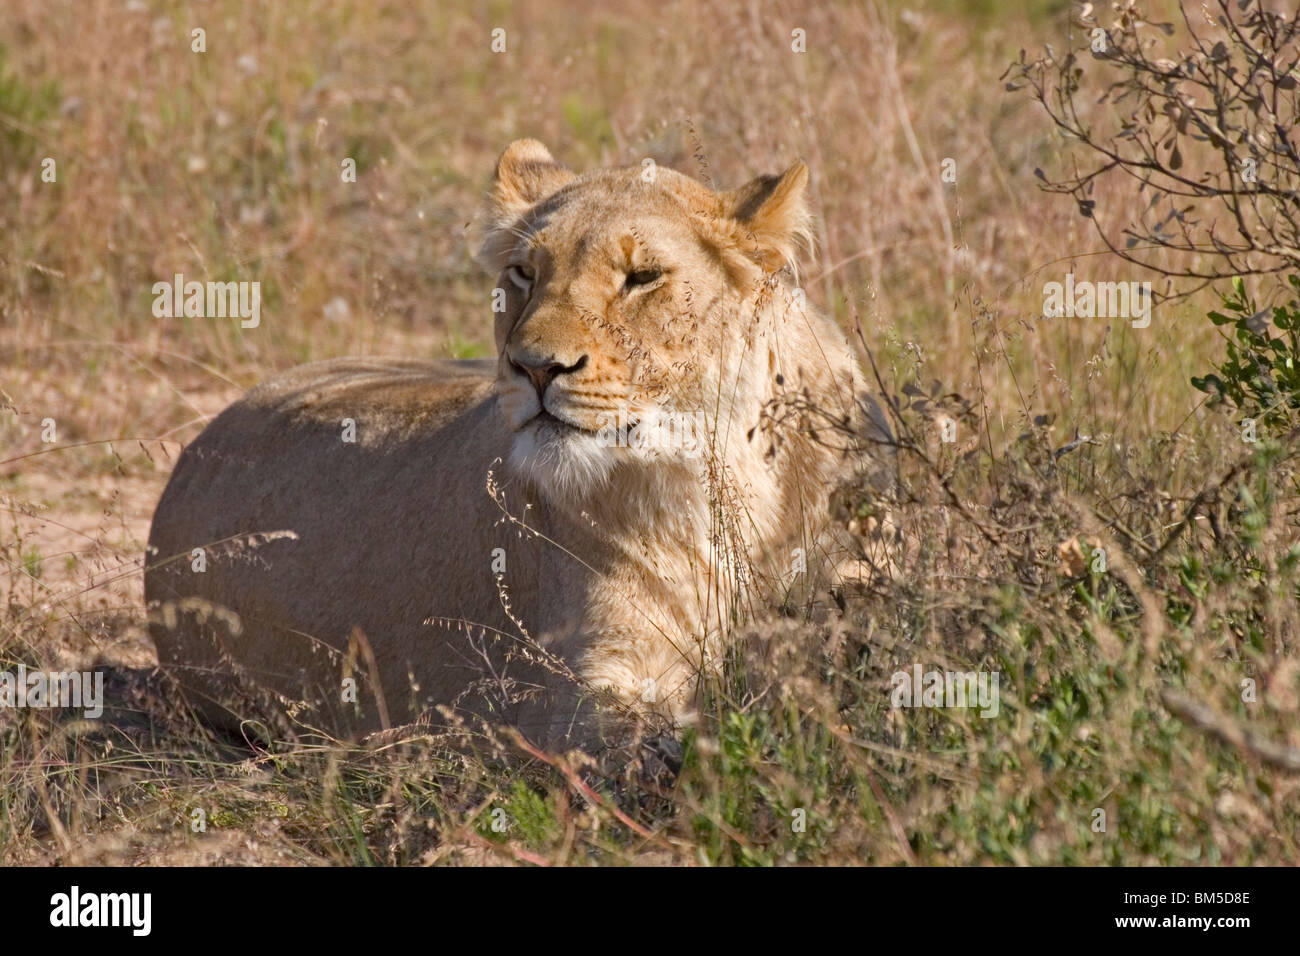 Lion in grassland / Panthera leo Stock Photo